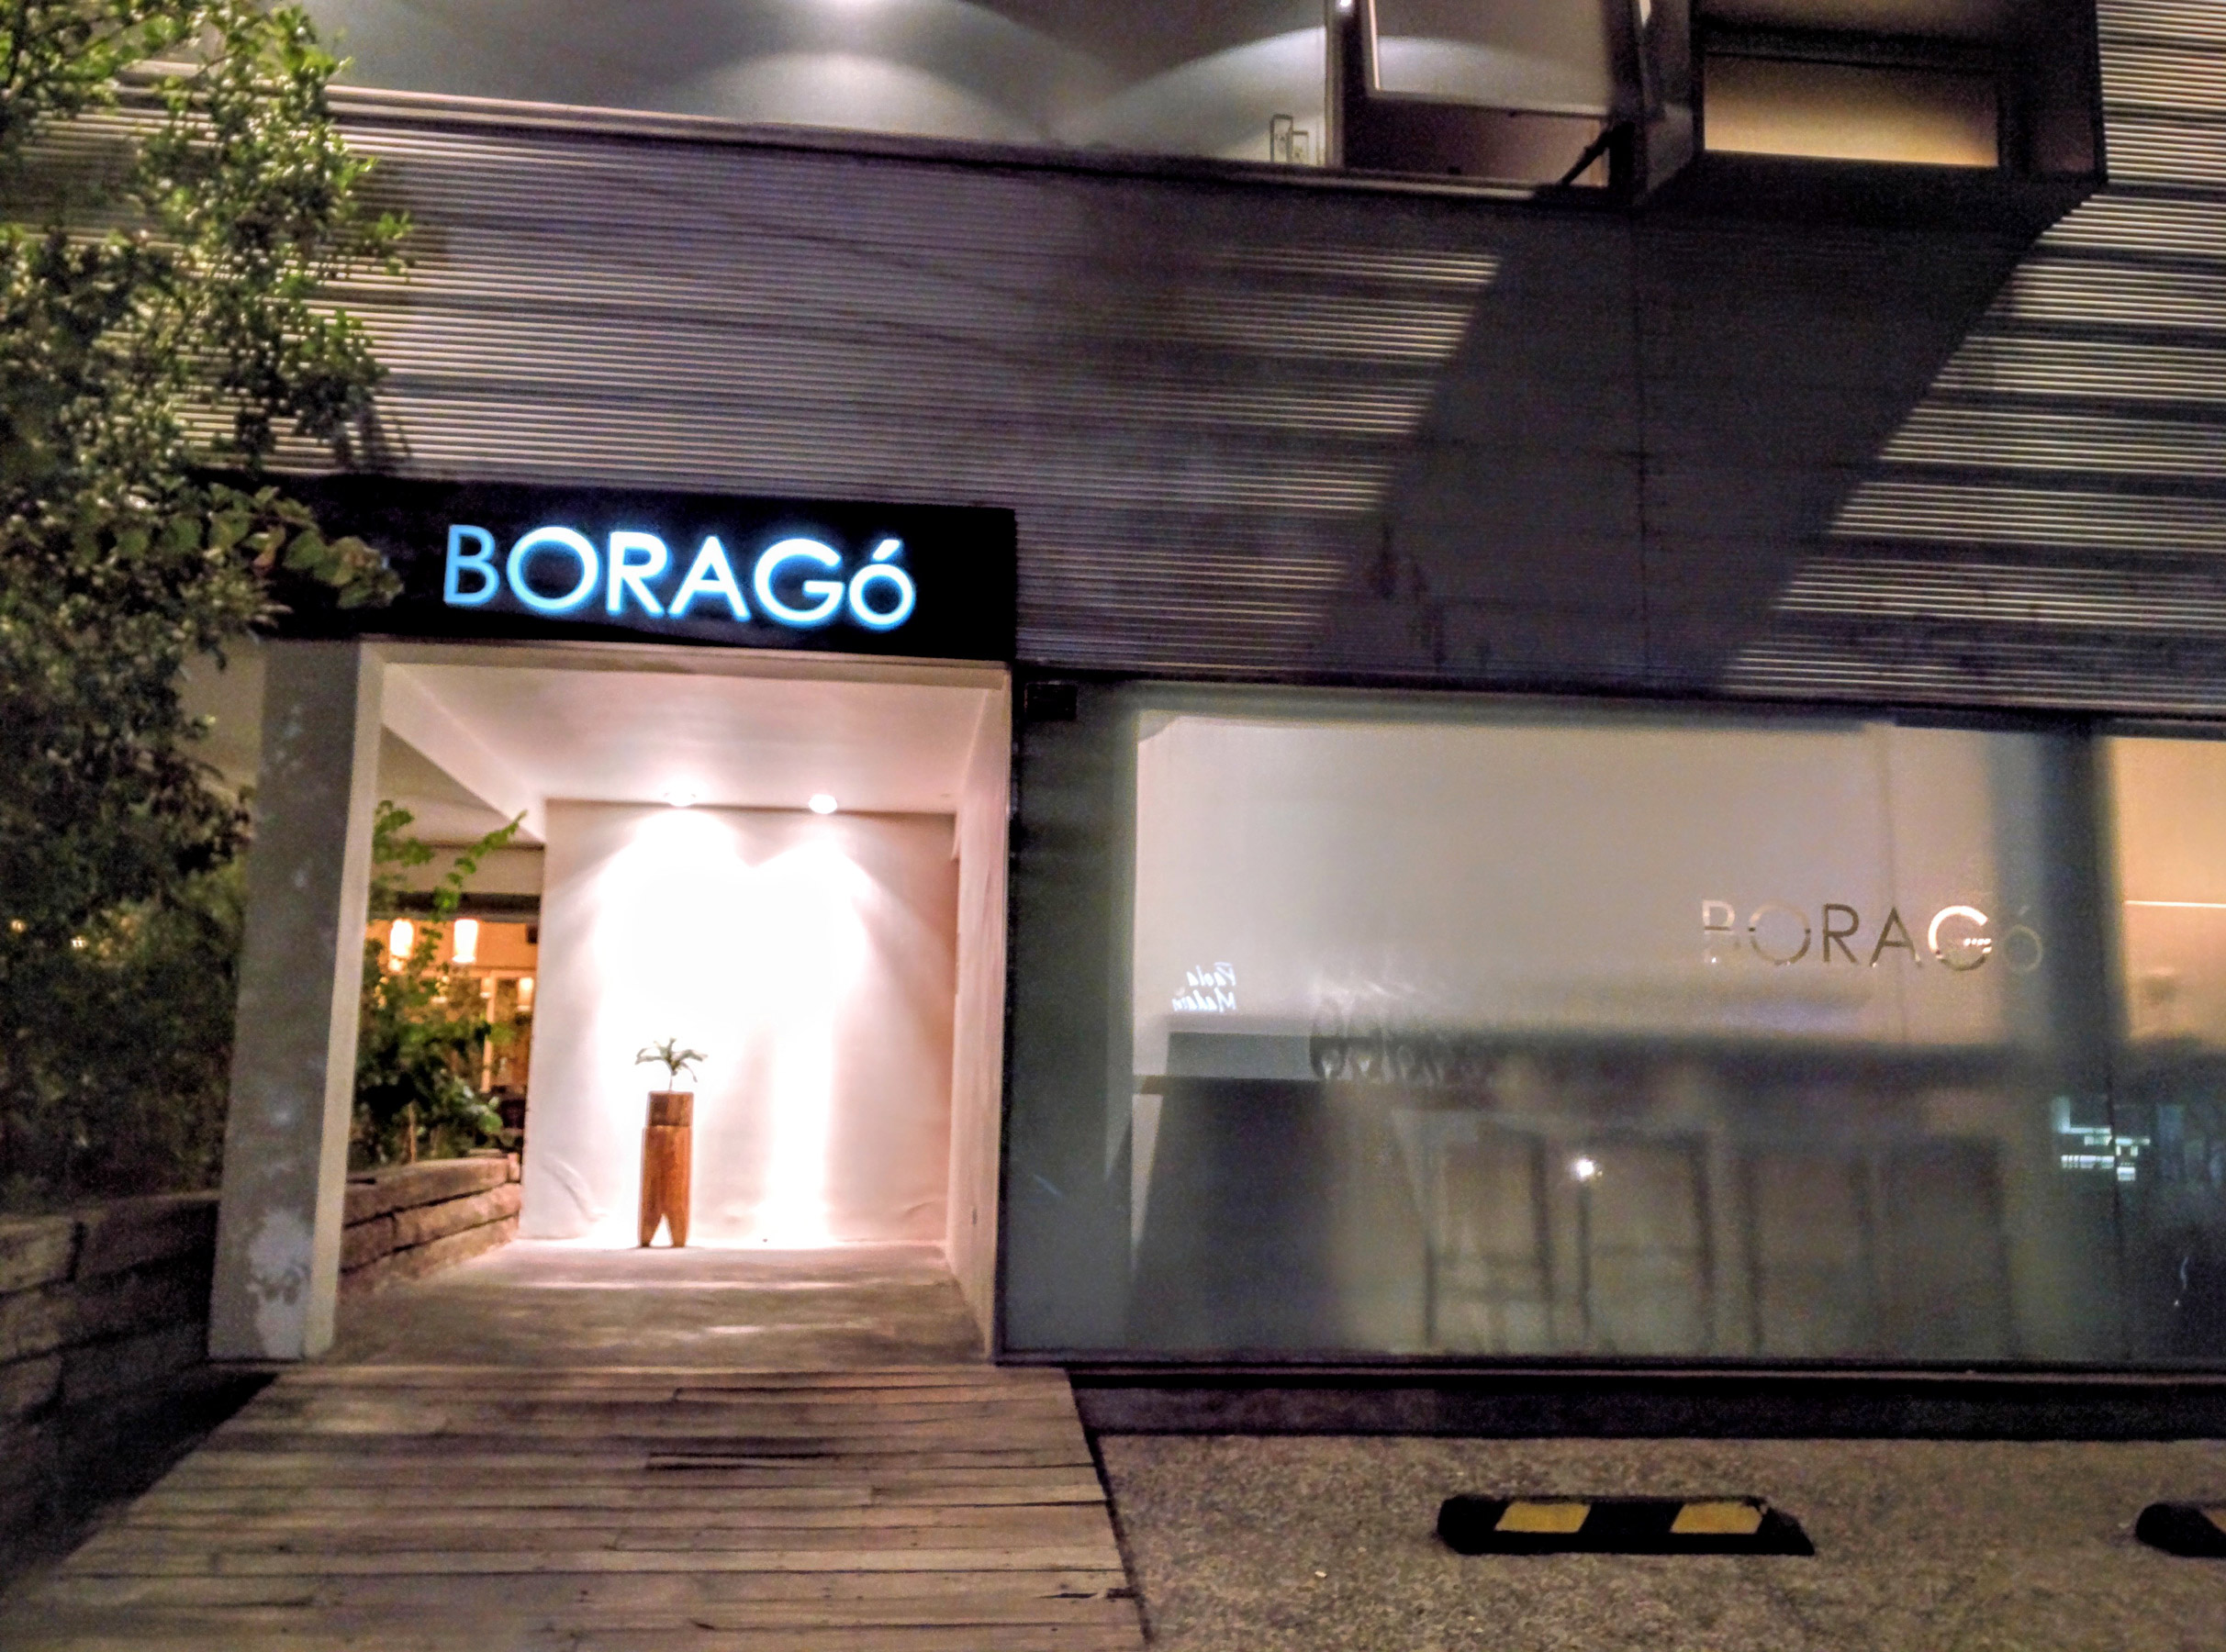 Boragó was named one of Latin America's 50 Best Restaurants in 2014.